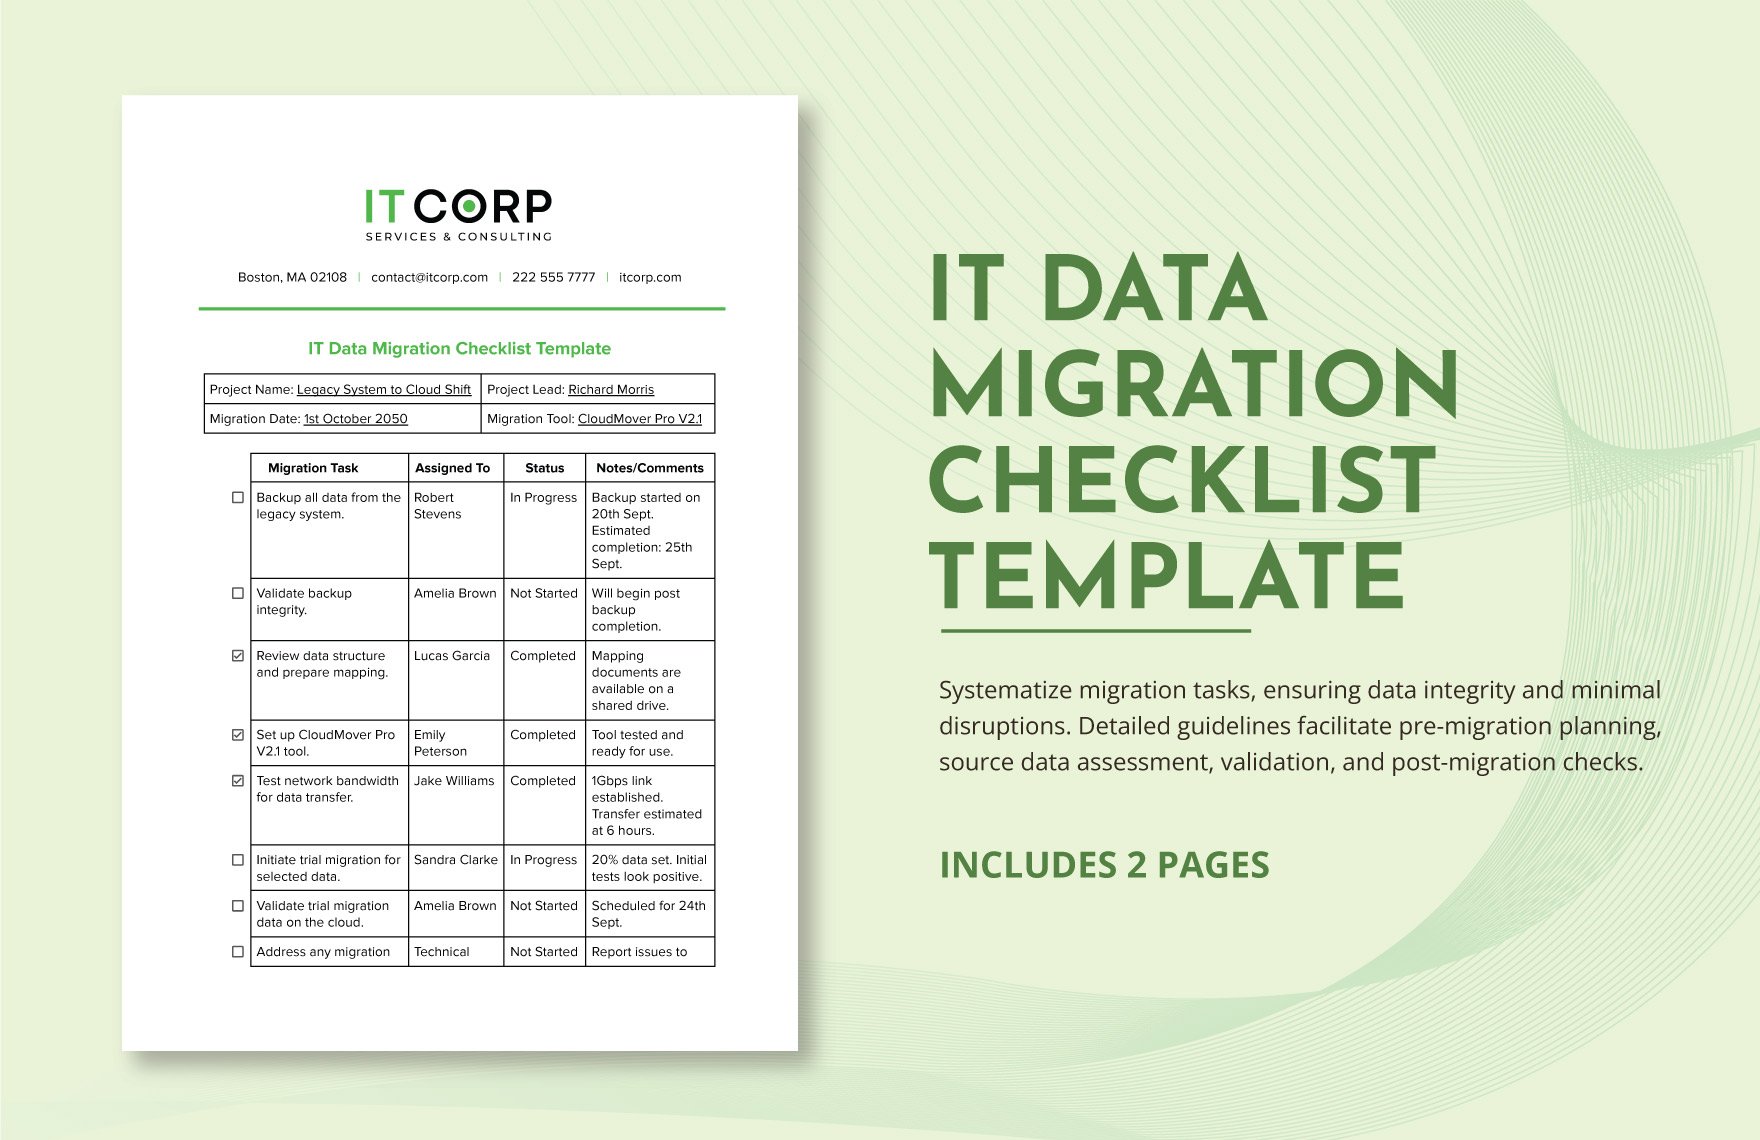 IT Data Migration Checklist Template in Word, Google Docs, PDF